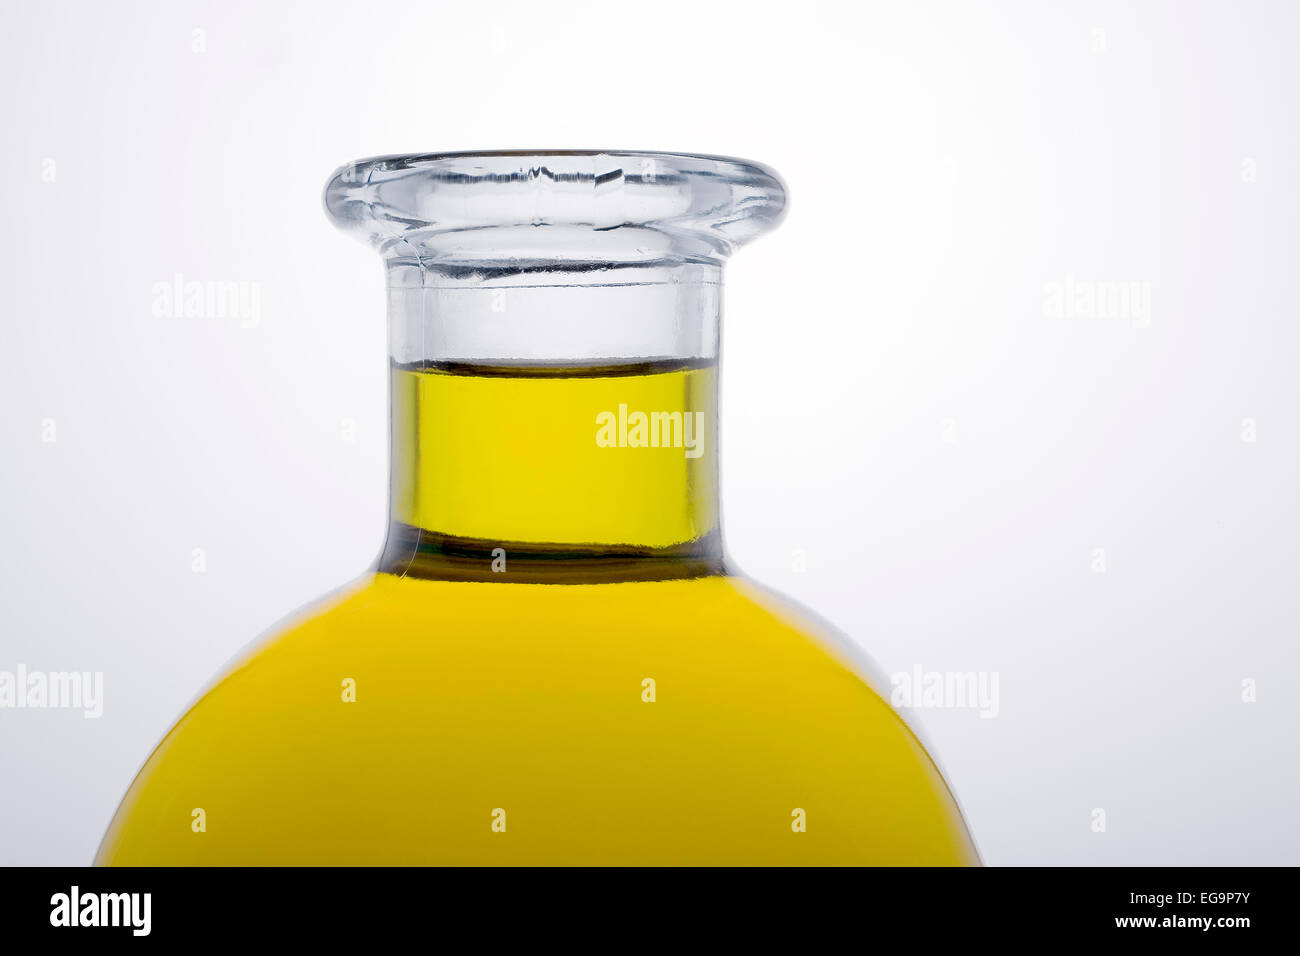 extra virgin olive oil botella de aceite de olive virgen extra Stock Photo